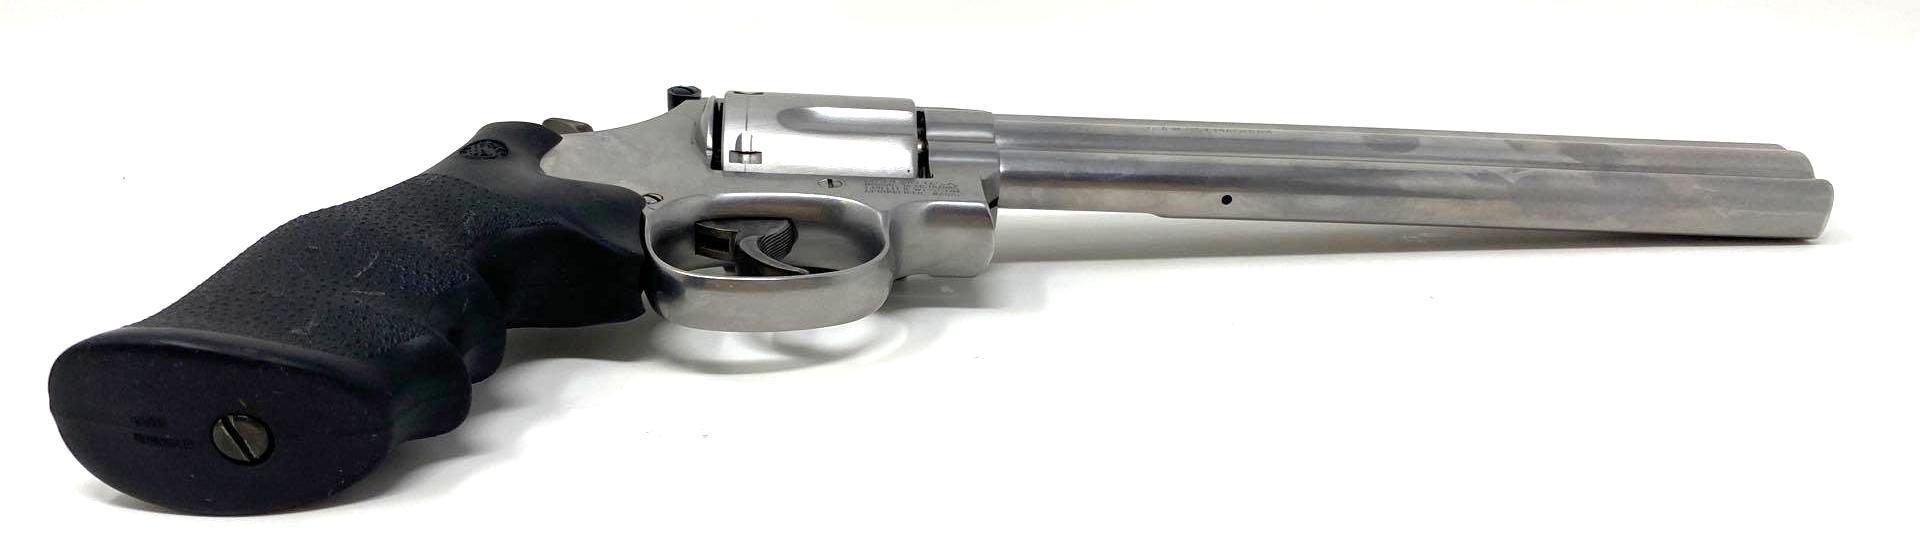 Smith & Wesson Model 686-4 .357 Mag. Revolver